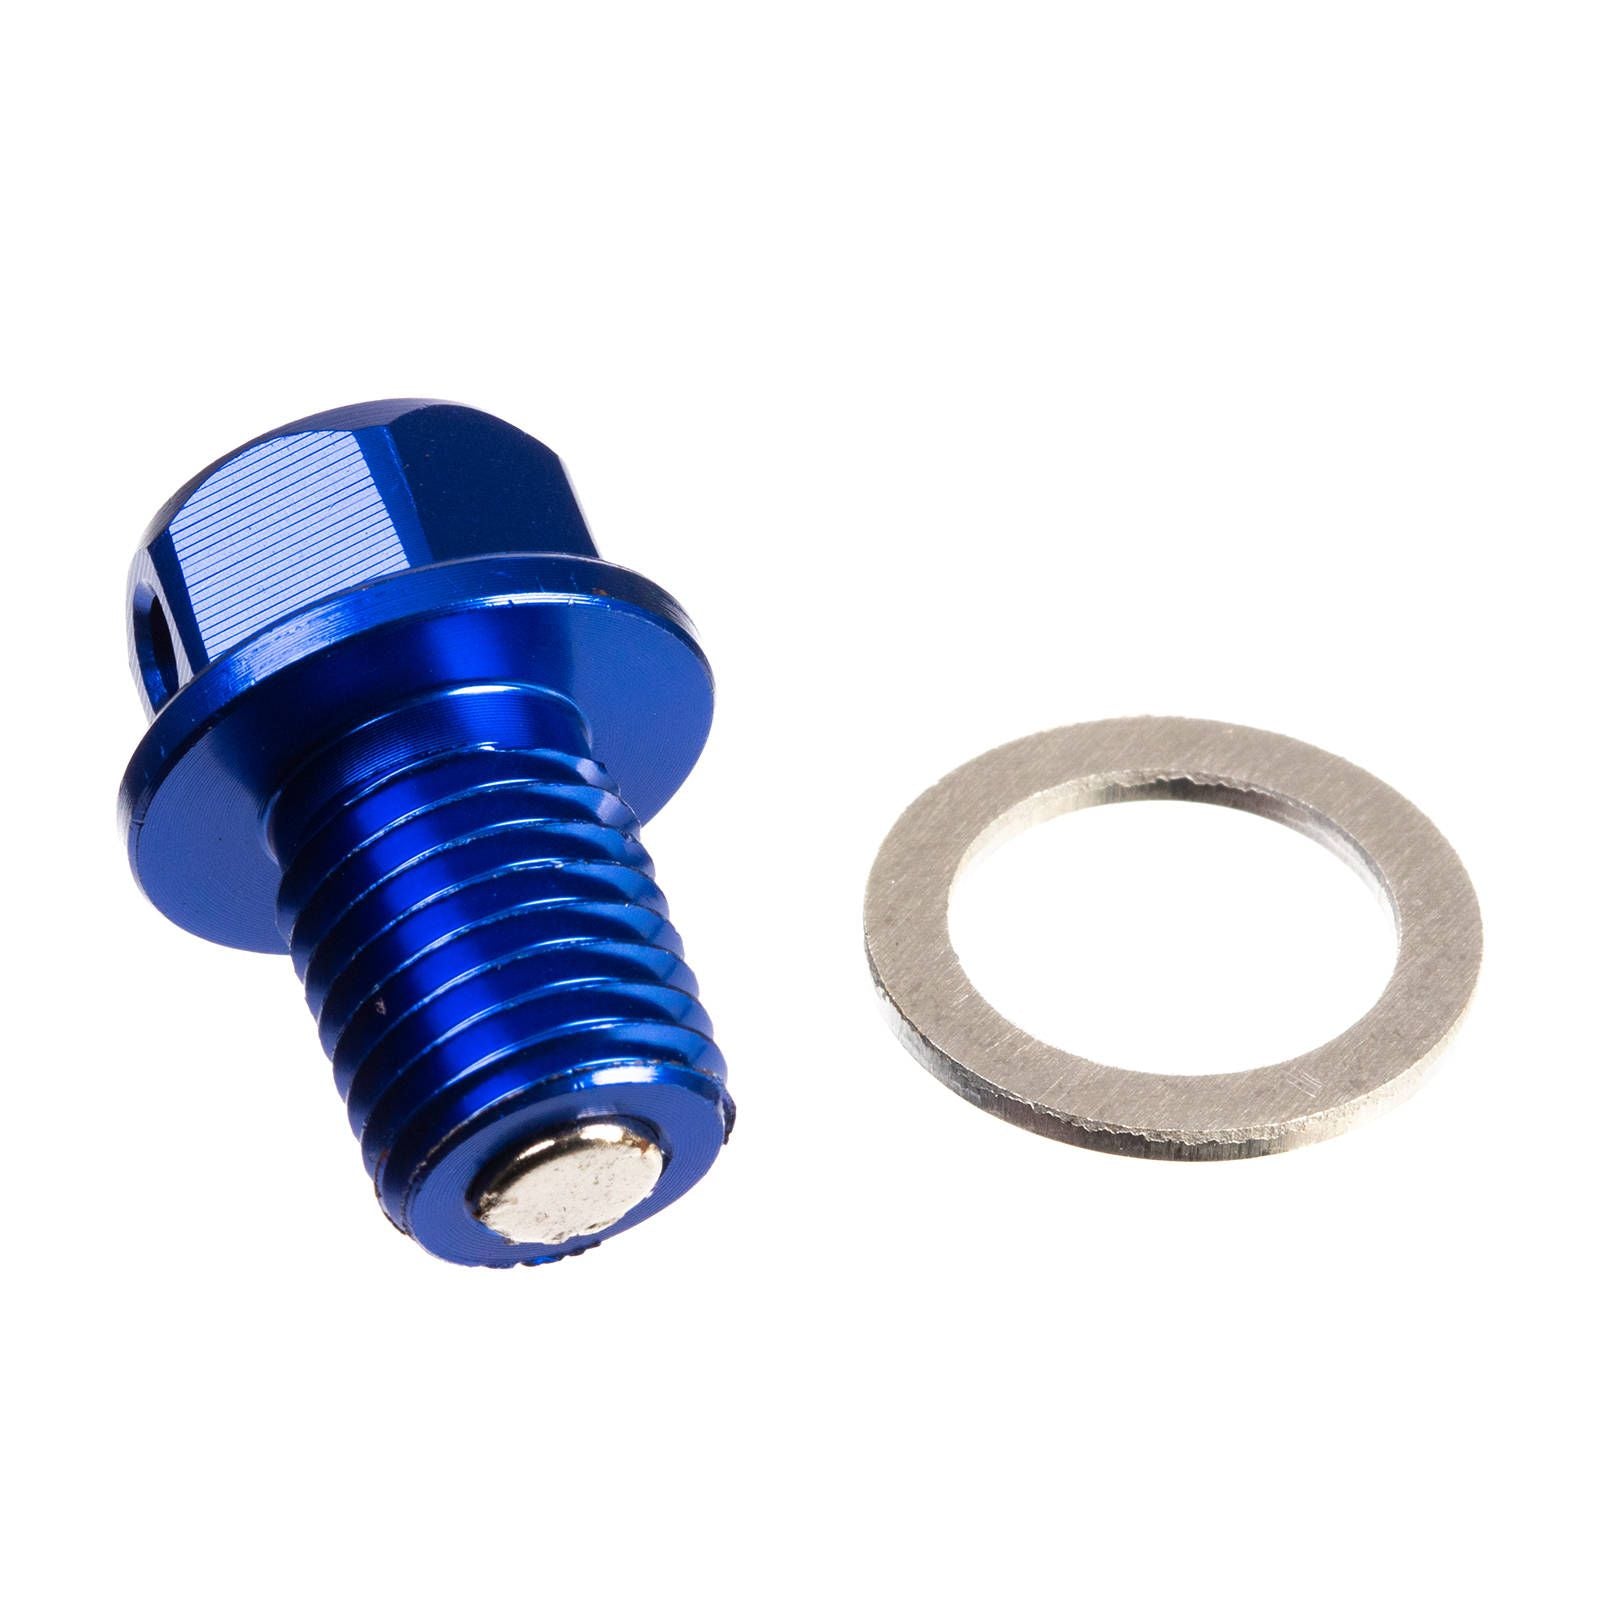 New WHITES Magnetic Sump Plug M12 x 15 x 1.5 - Blue #WPMDP121515B